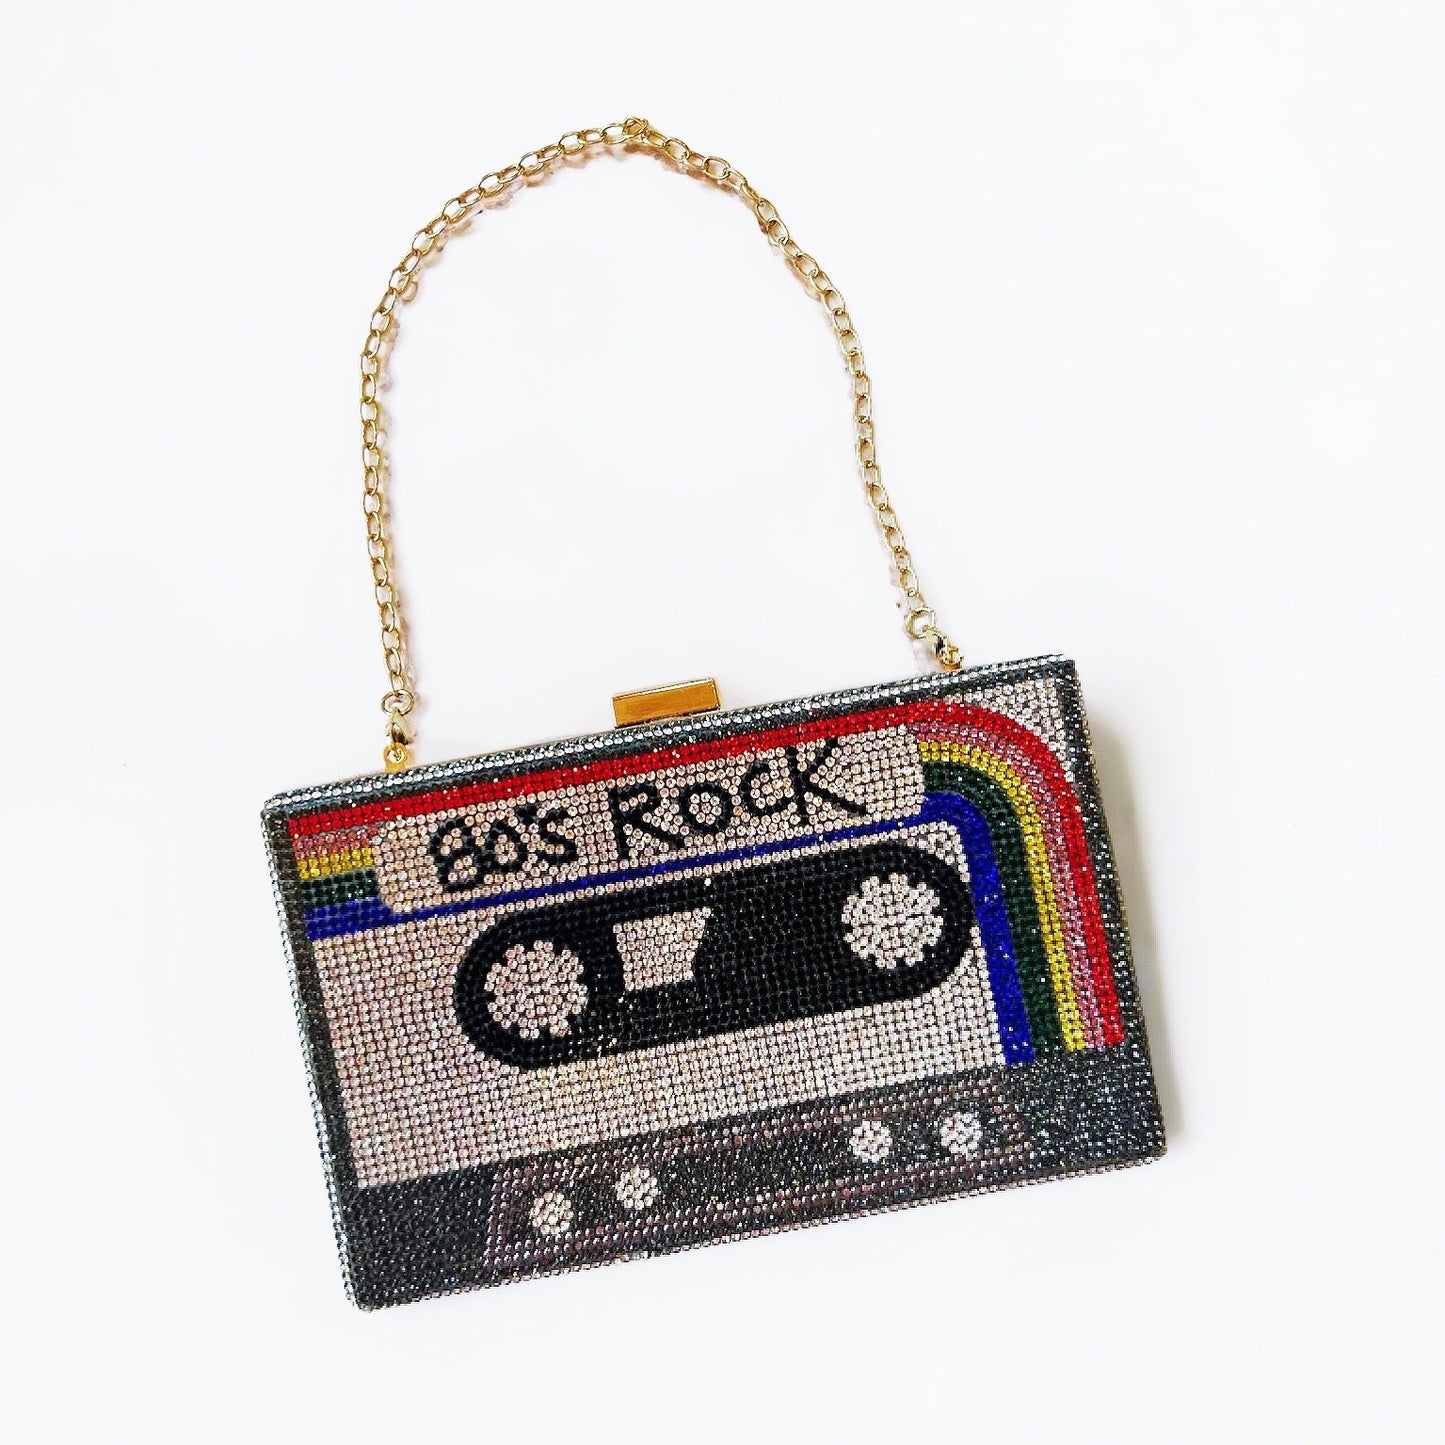 80's Rock Cassette Tape Clutch Handbag - Boho Mamma Store